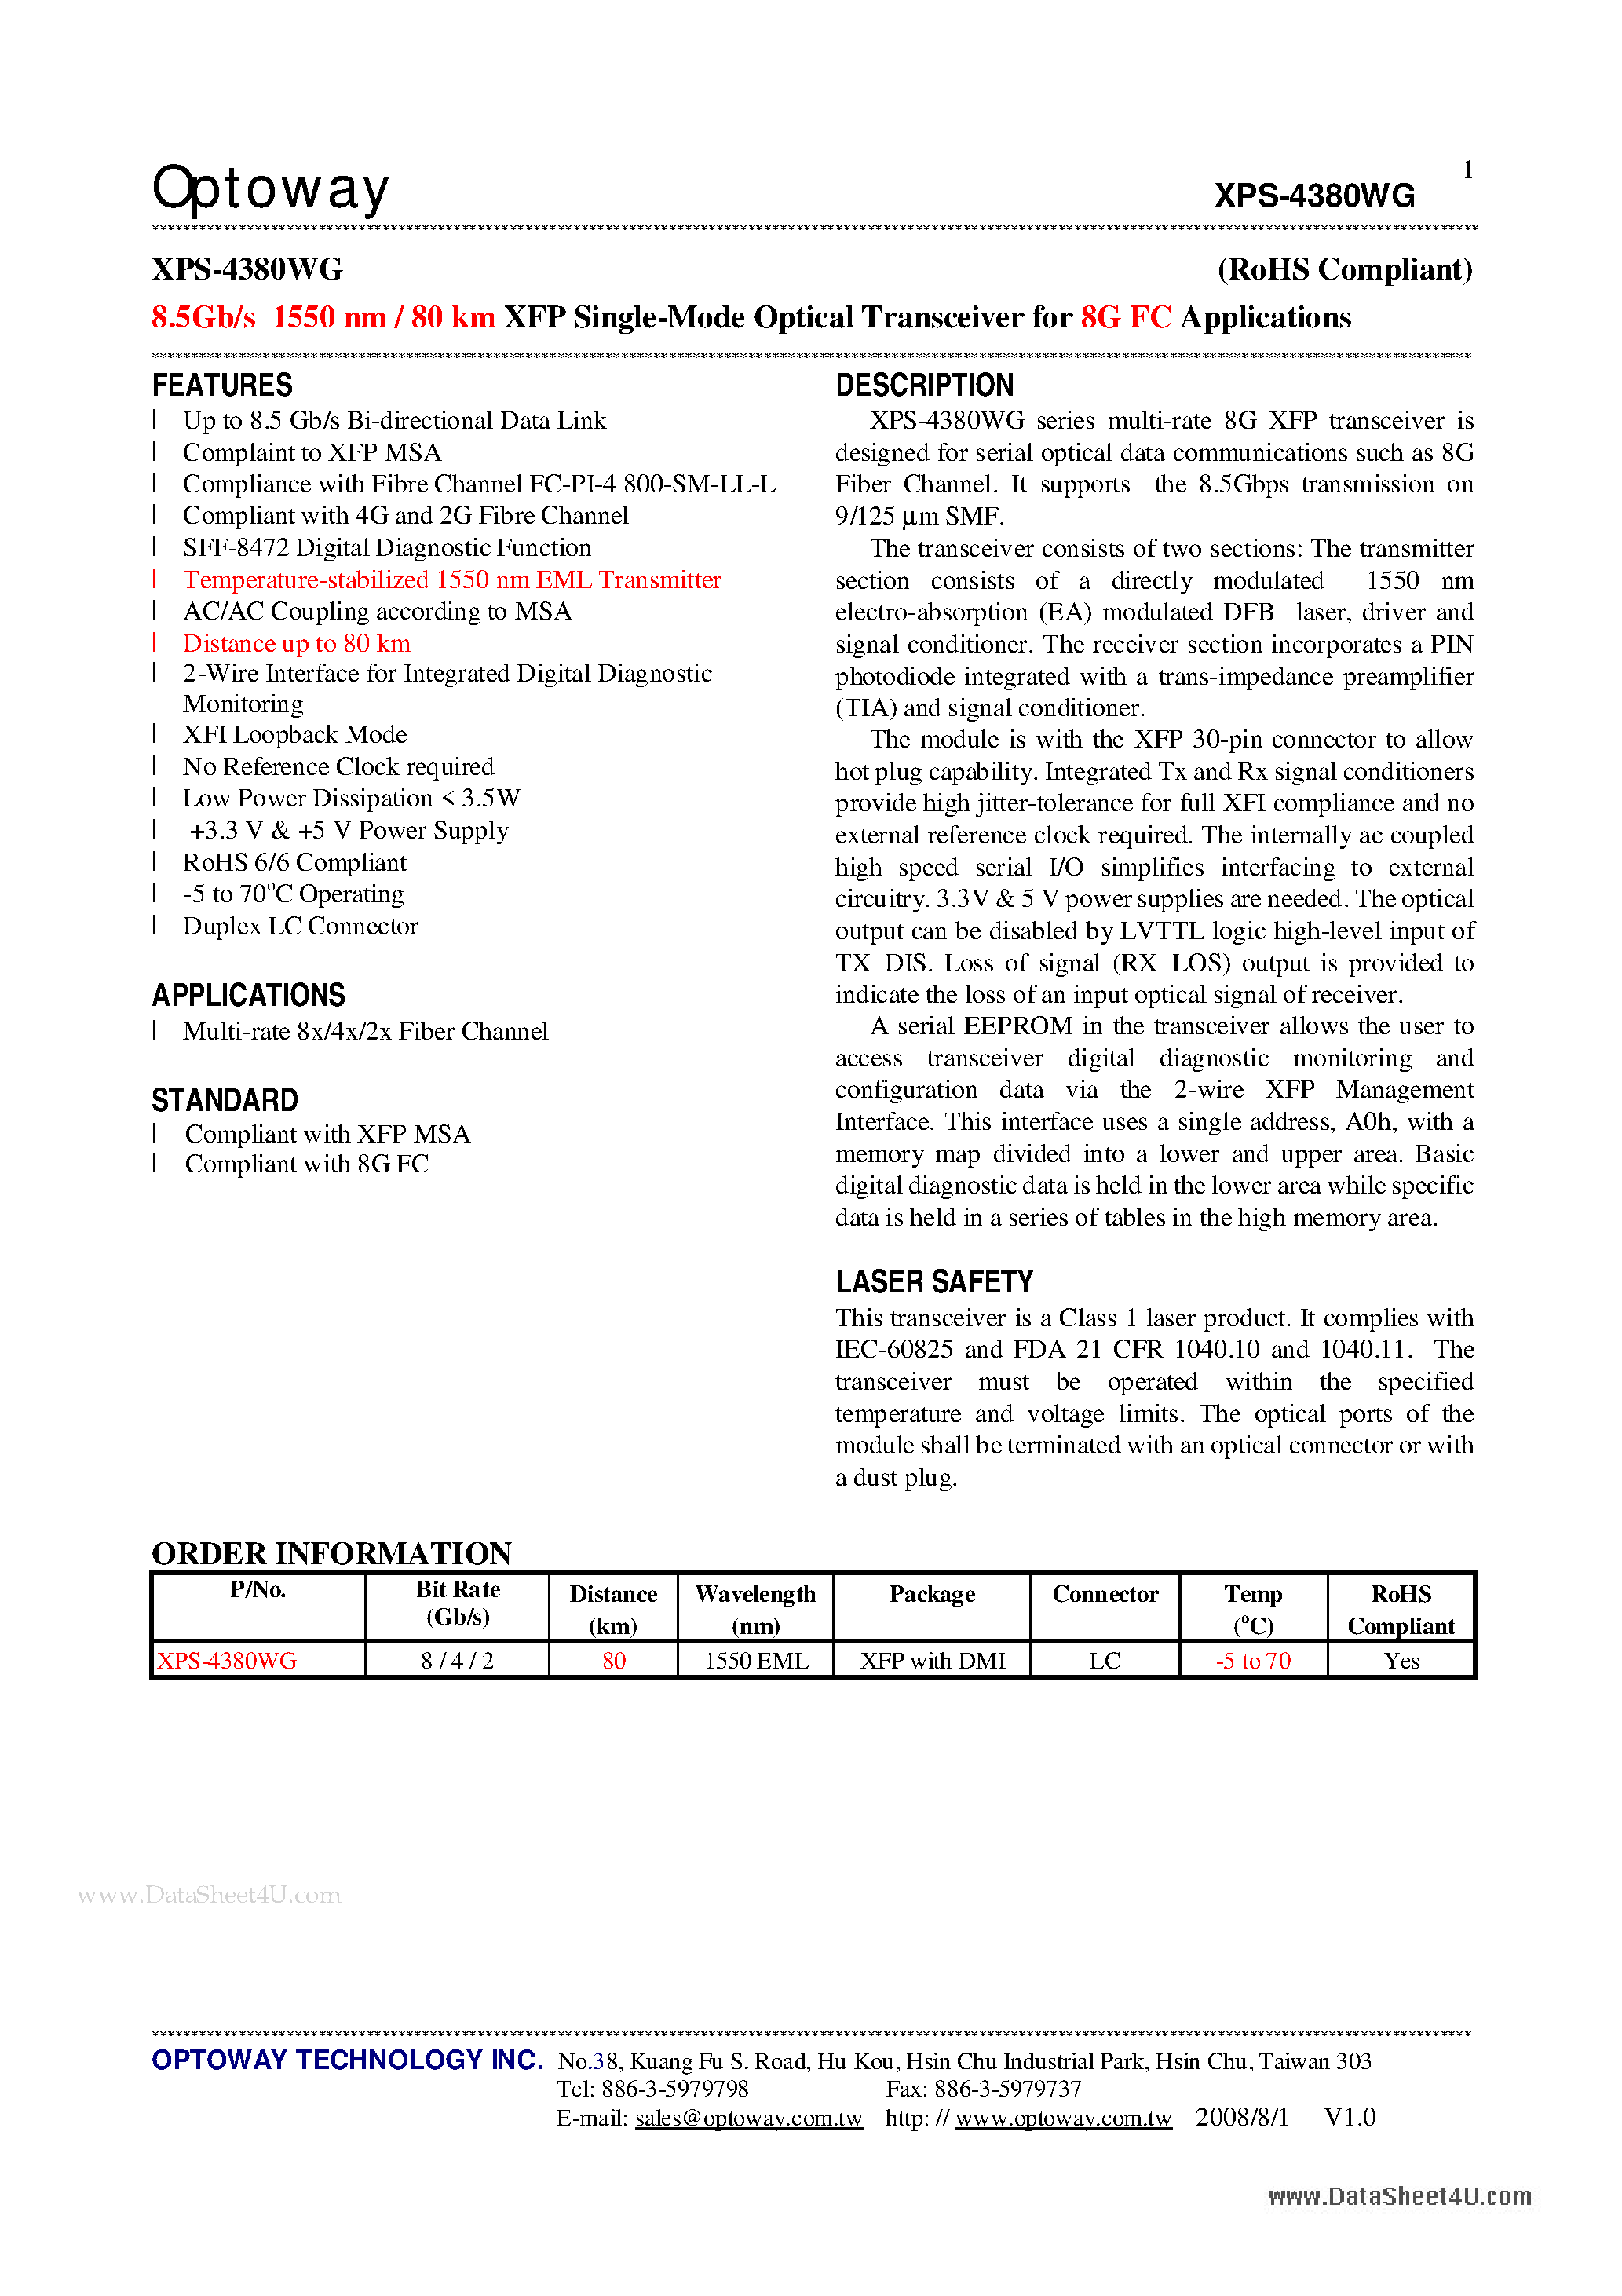 Datasheet XPS-4380WG - 8.5Gb/s 1550 nm / 80km XFP Single-Mode Optical Transceiver page 1